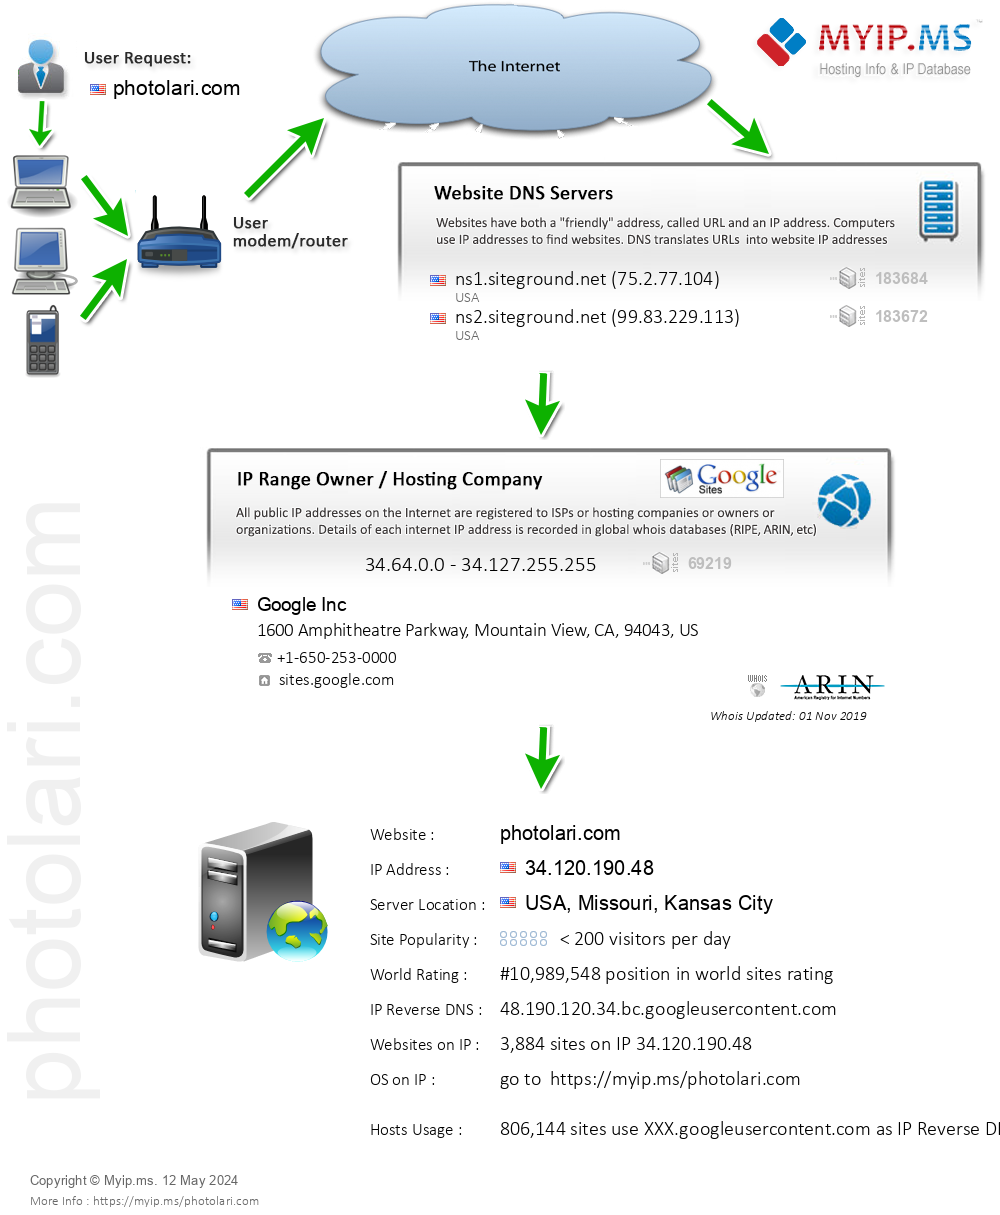 Photolari.com - Website Hosting Visual IP Diagram